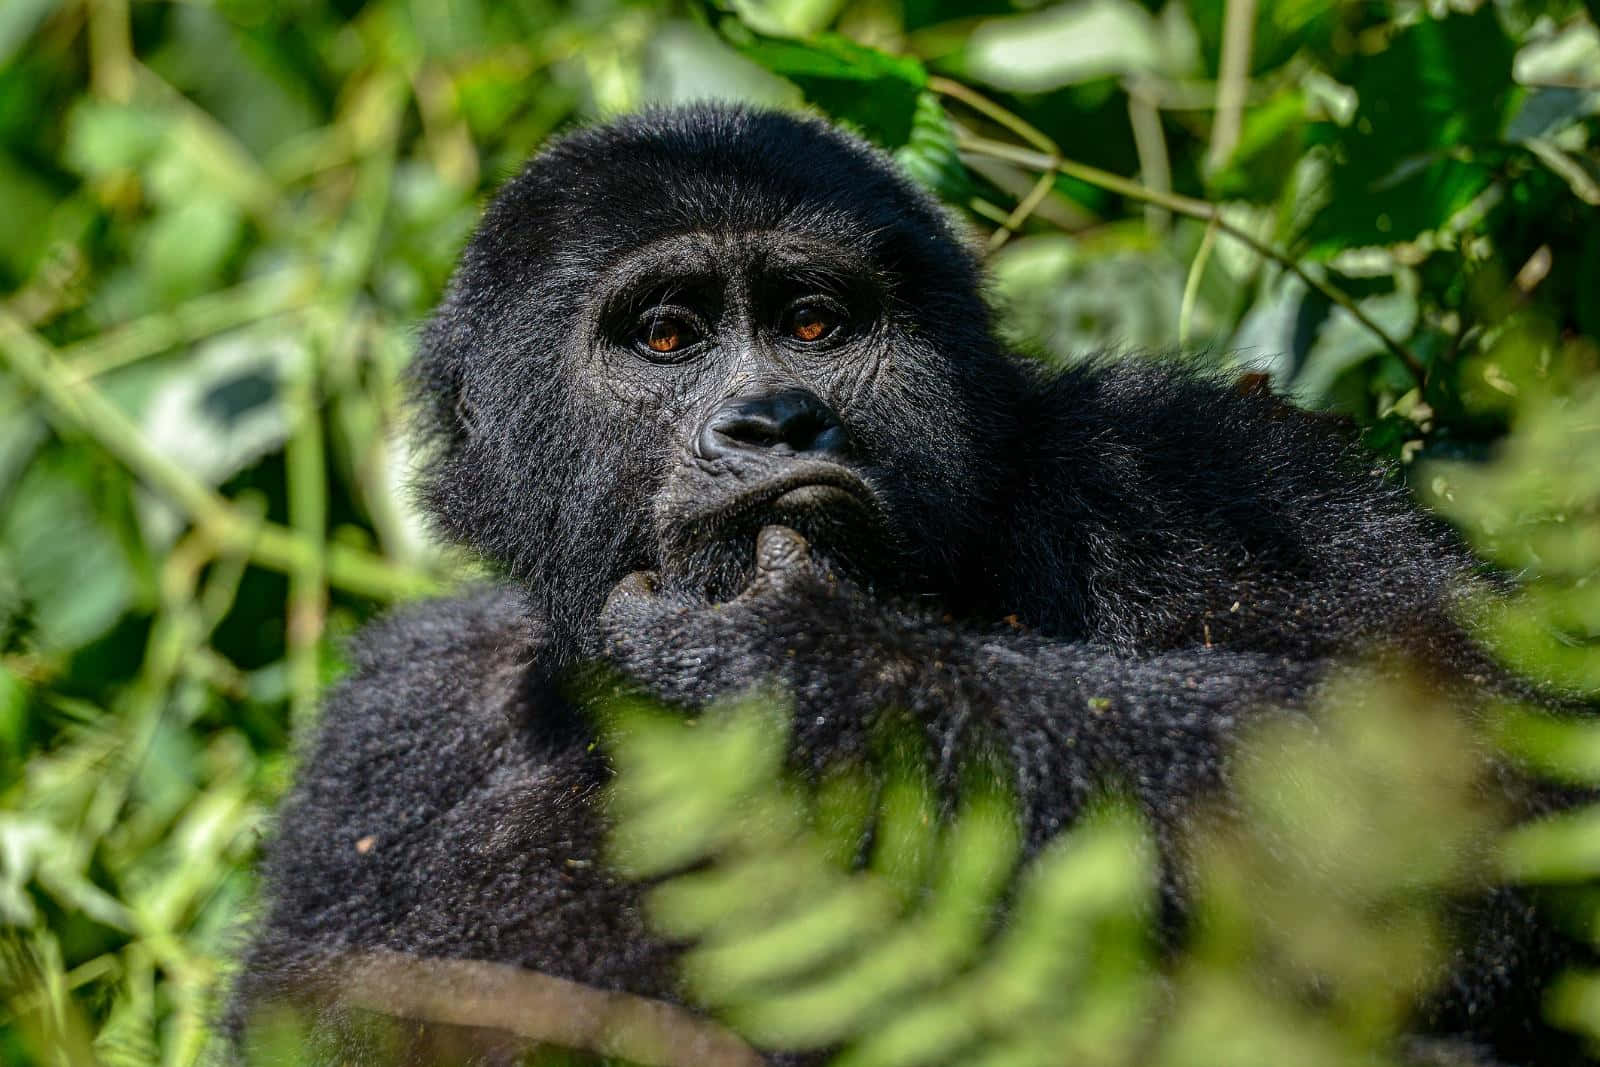 "A majestic silverback gorilla surveys its territory"